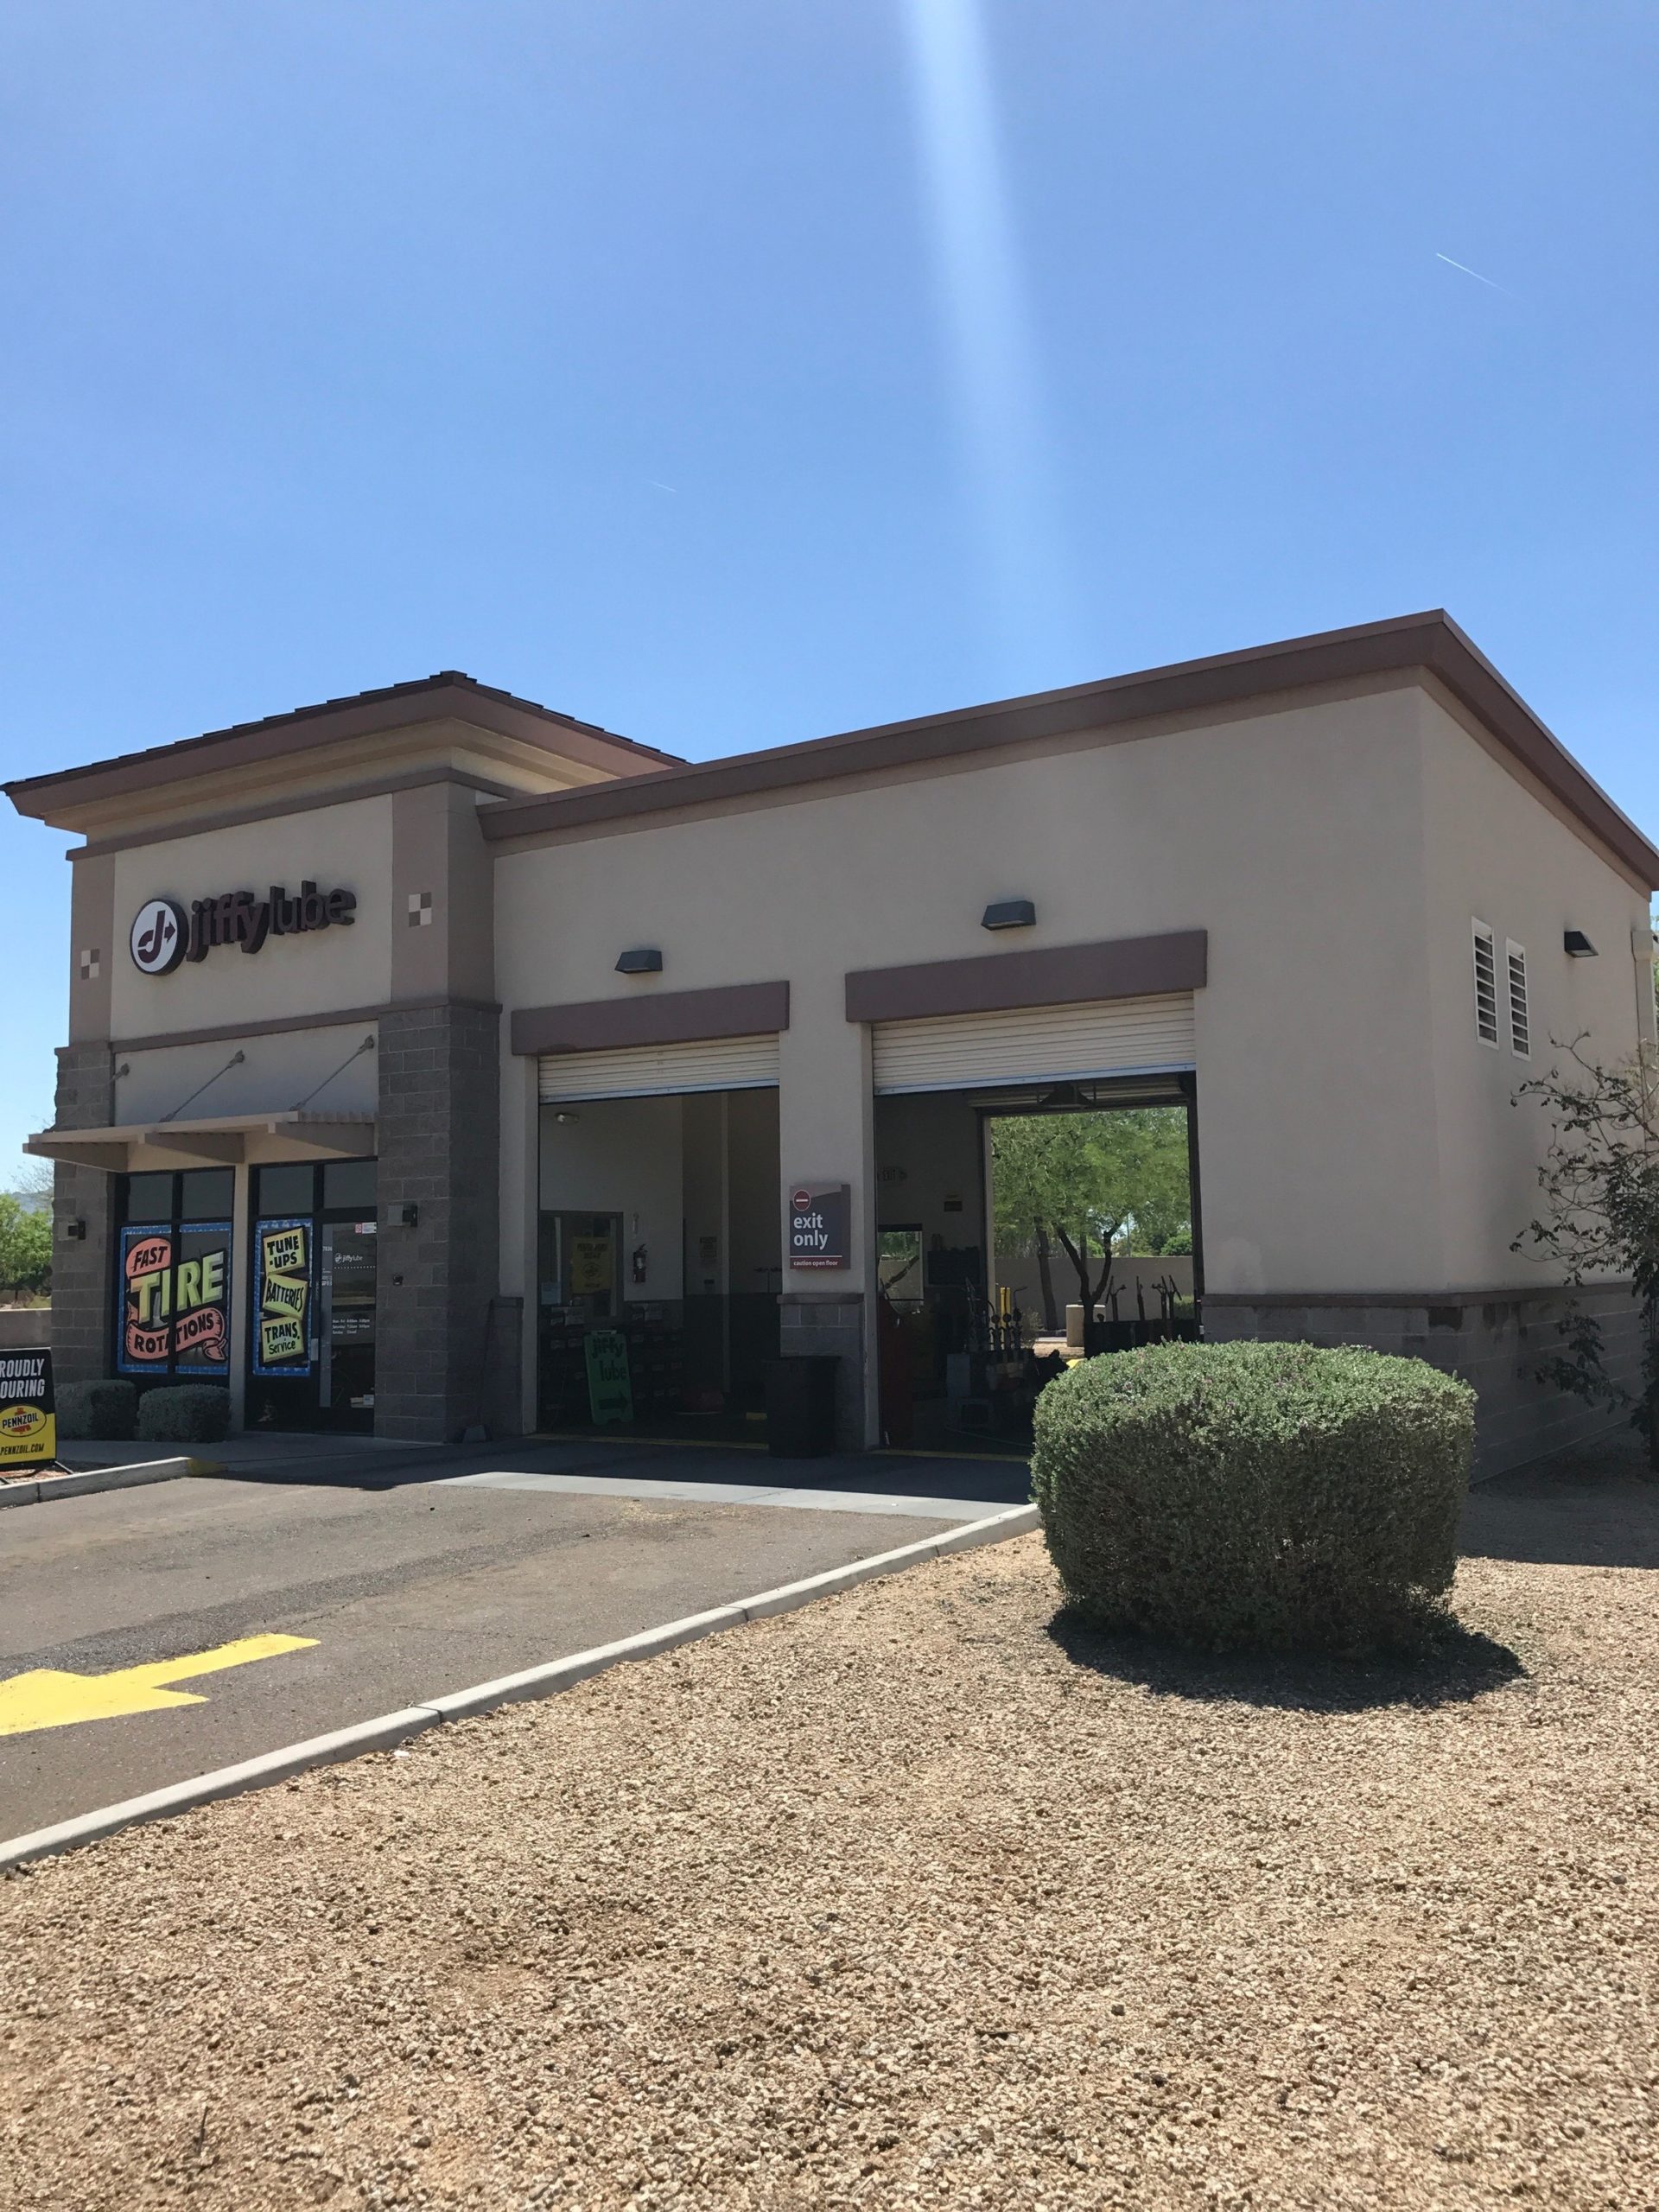 Exterior Photograph of Jiffy Lube in Phoenix, Arizona